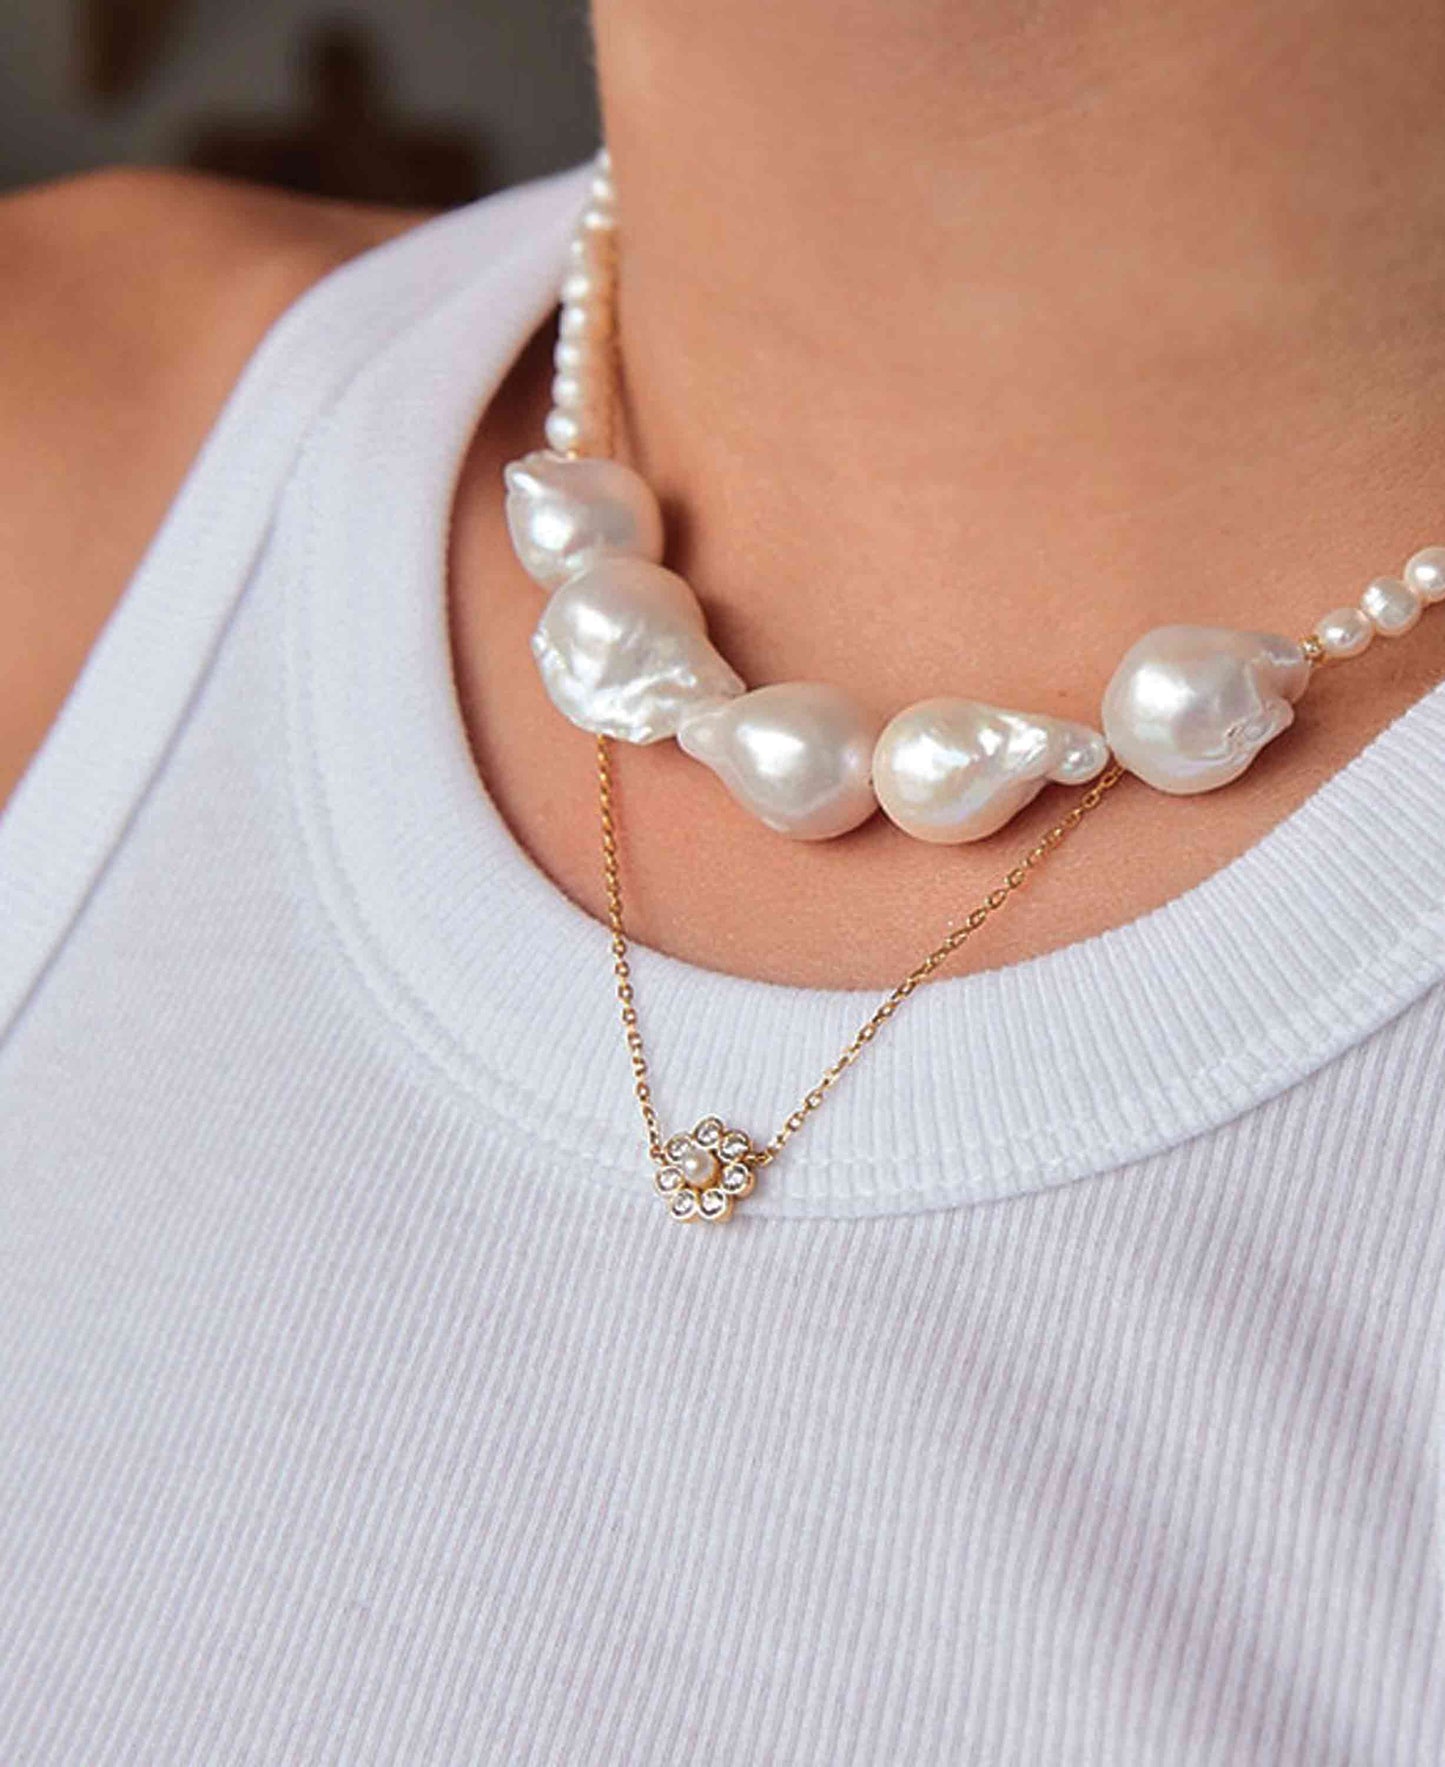 Aya necklace